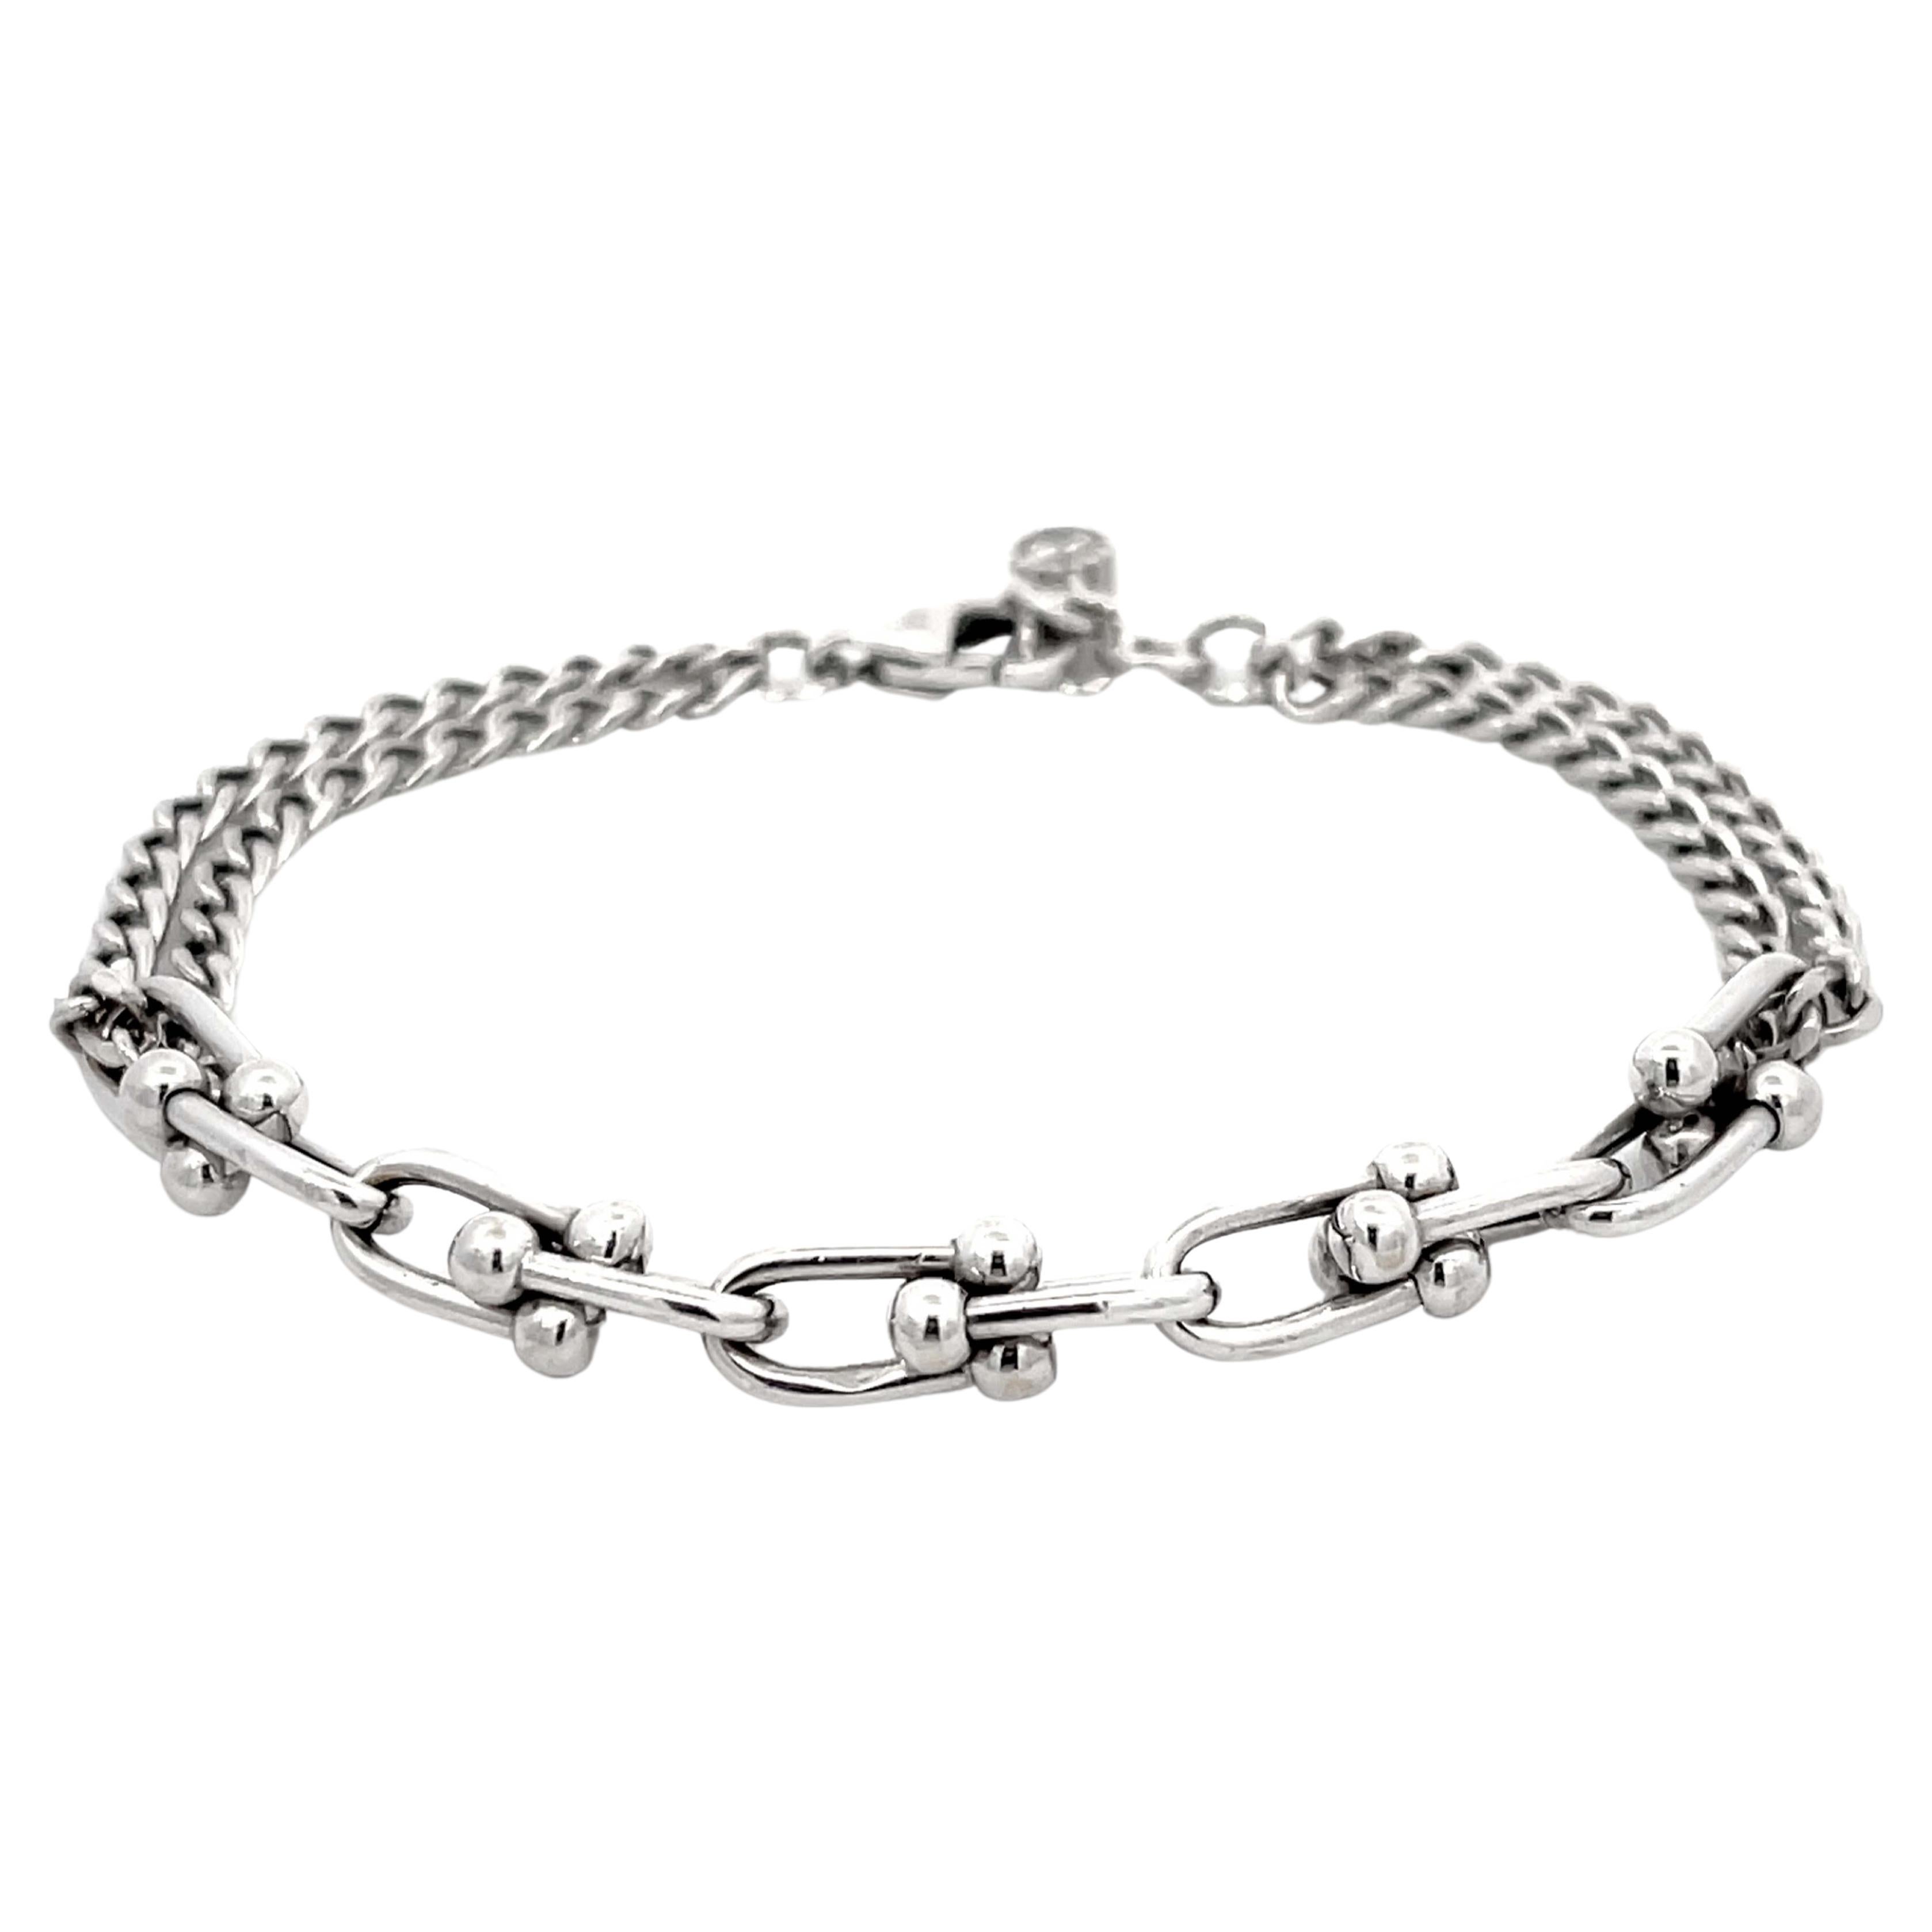 Genola Chain Link Bracelet in 14k White Gold For Sale